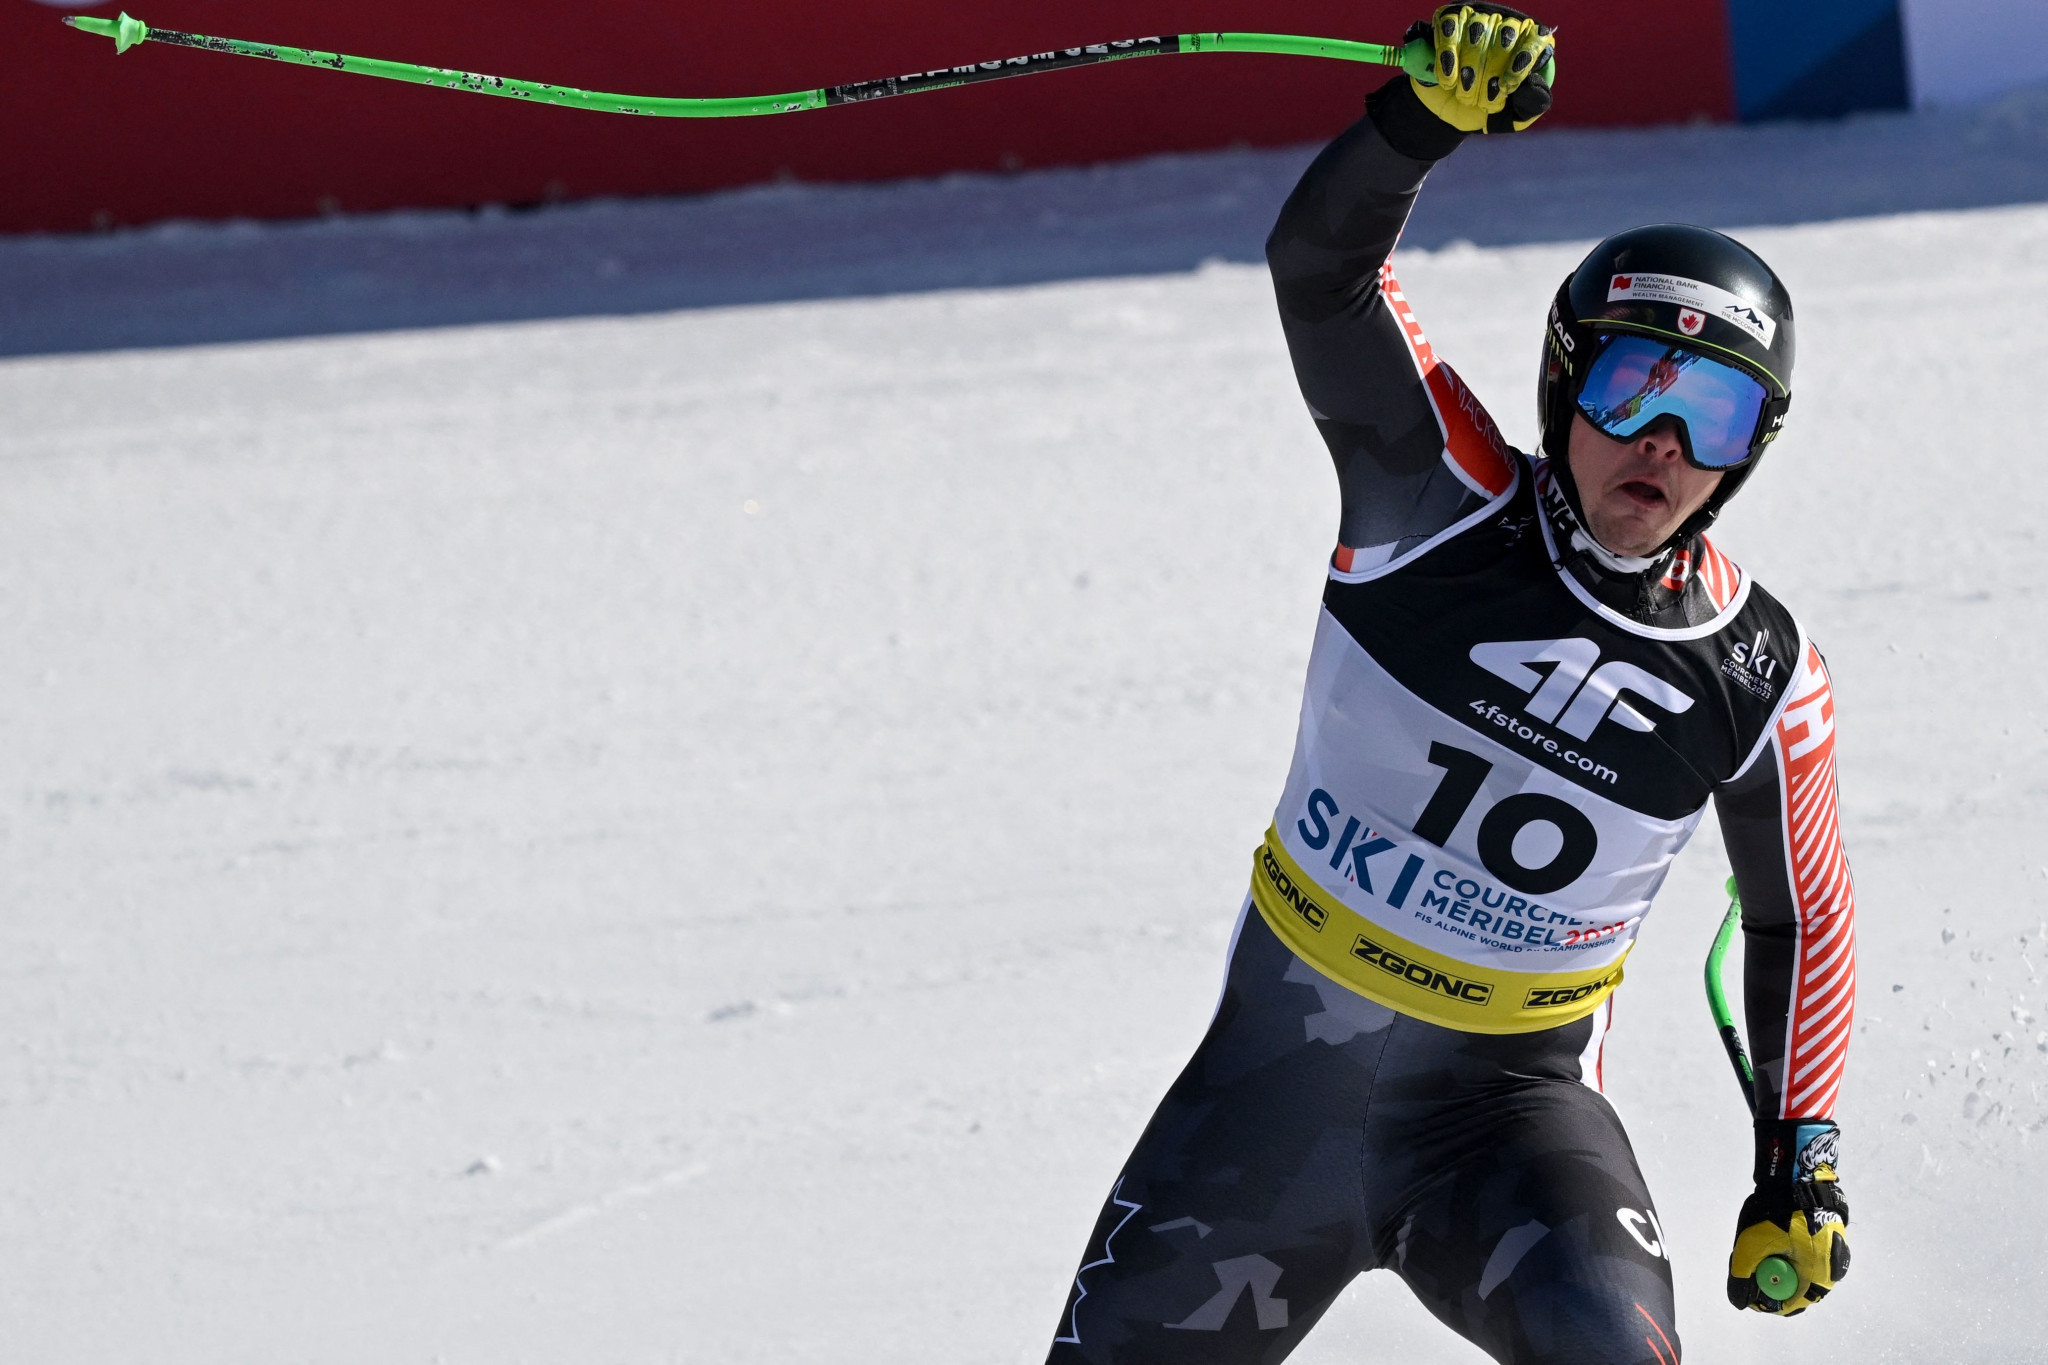 Crawford shocks field with super-G gold at FIS Alpine Ski World Championships